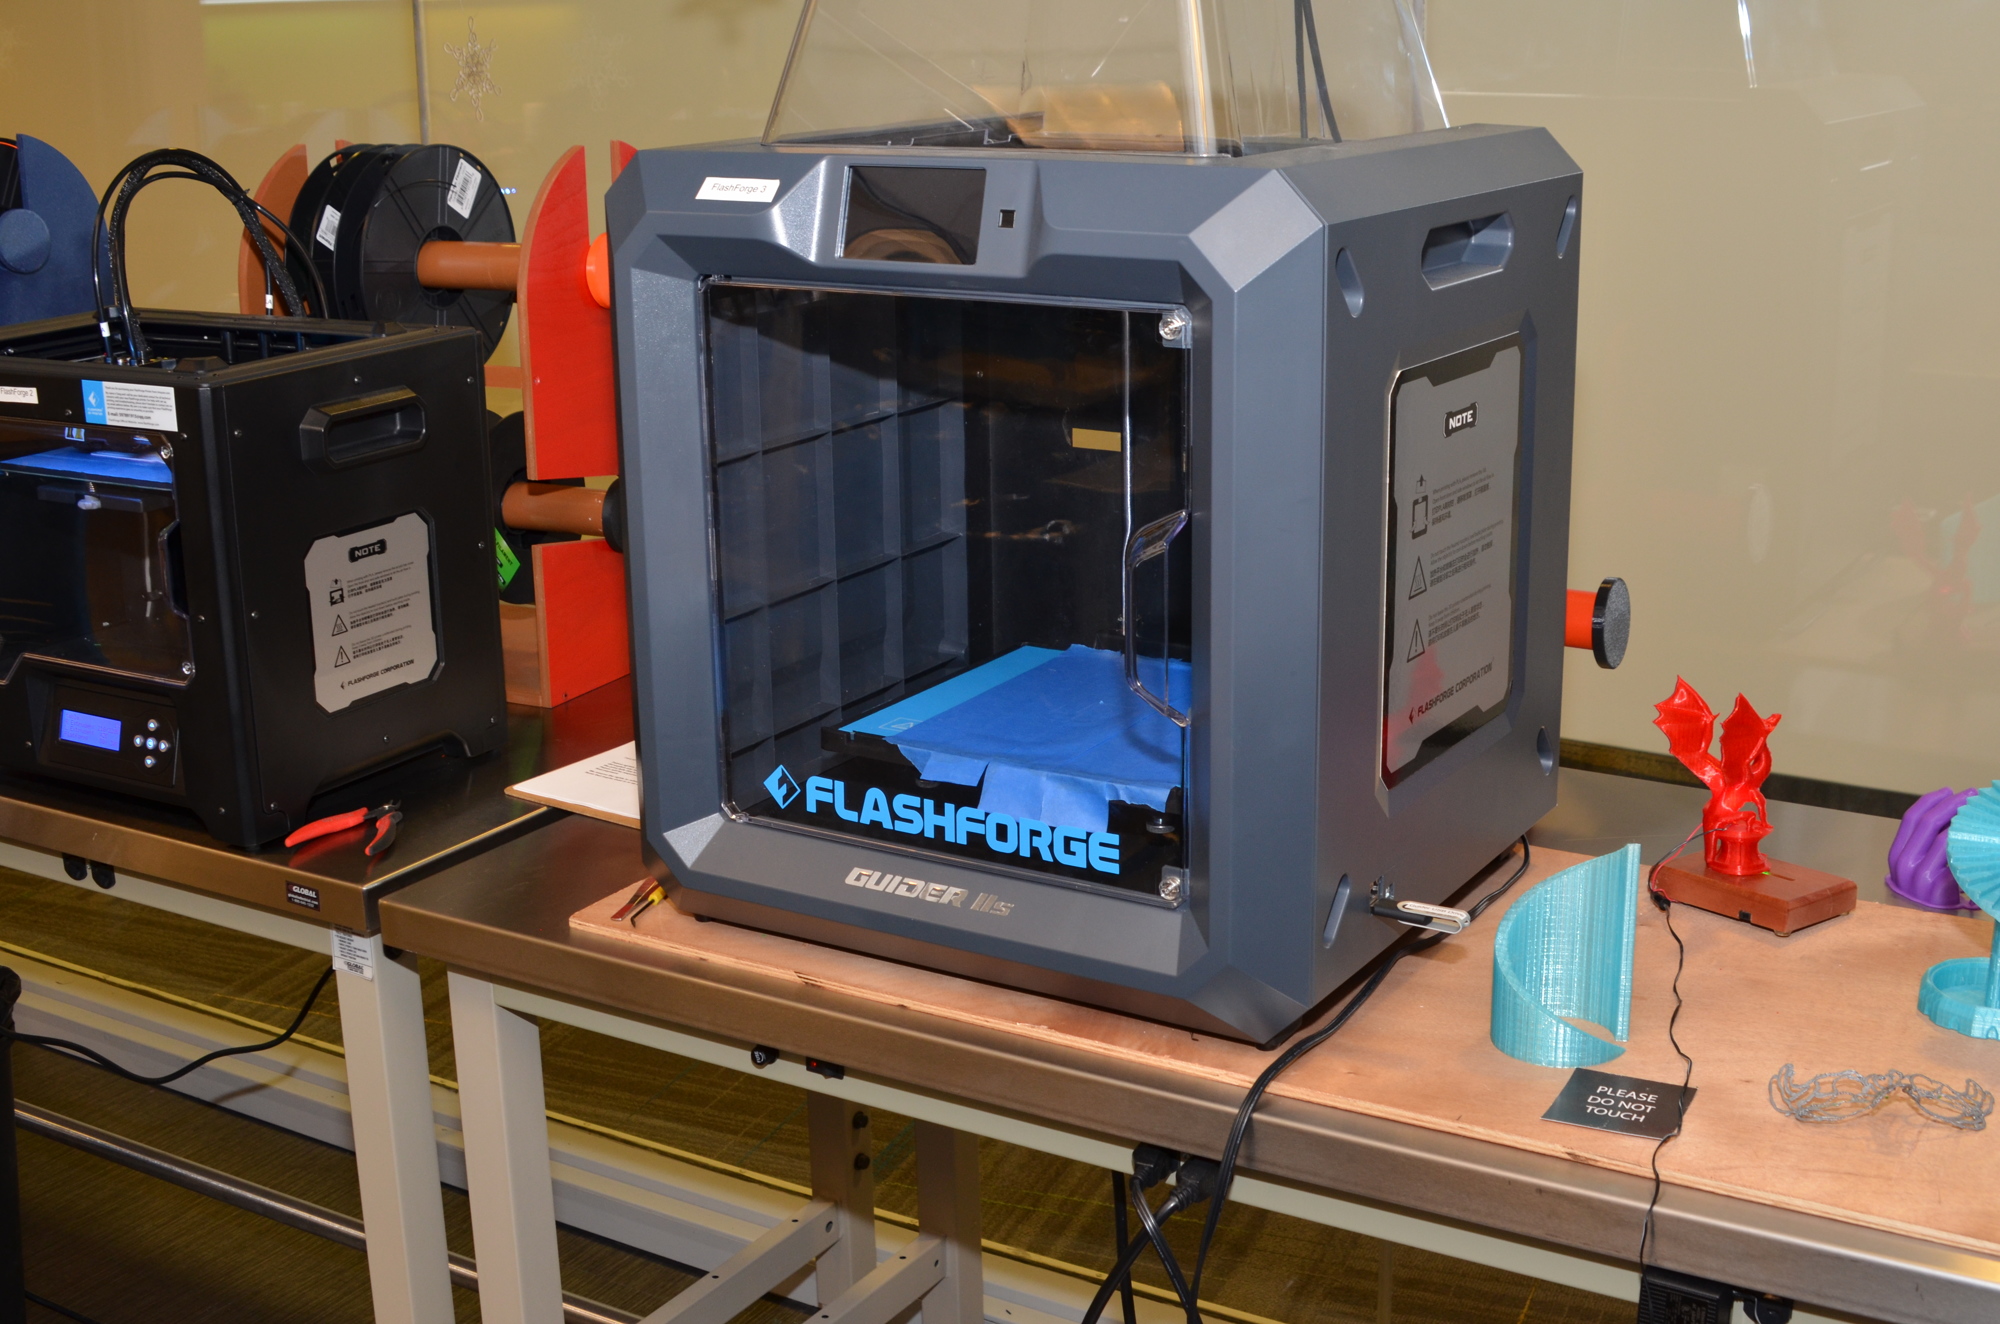 The Orlando branch has several 3D printers.